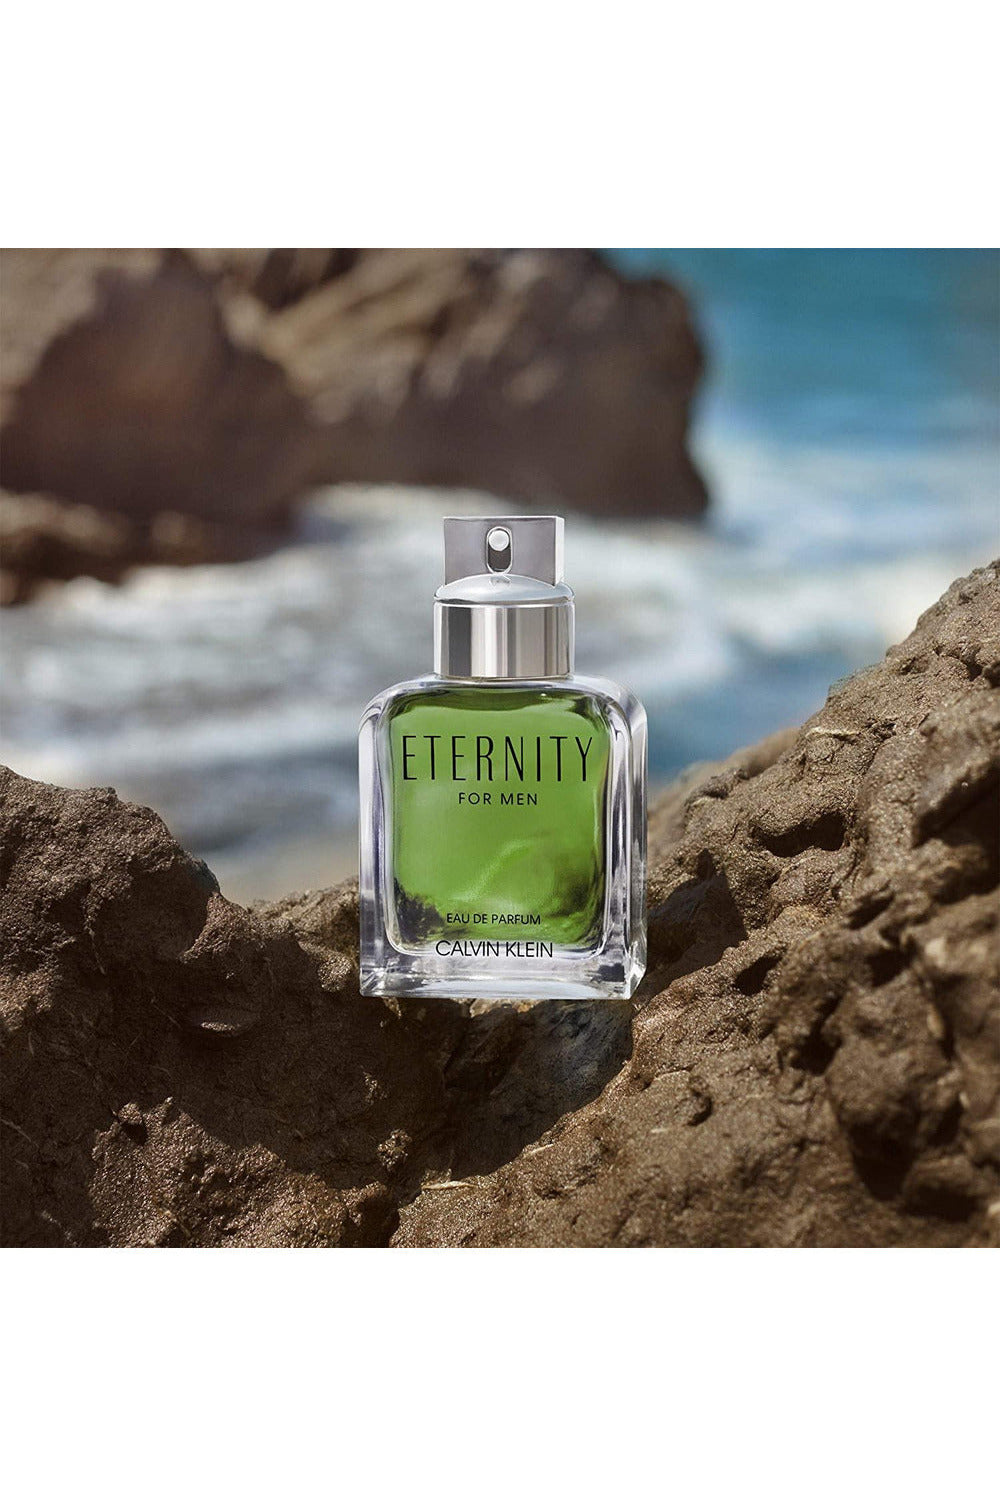 Buy Calvin Klein Eternity Men Perfume - 100ml in Pakistan